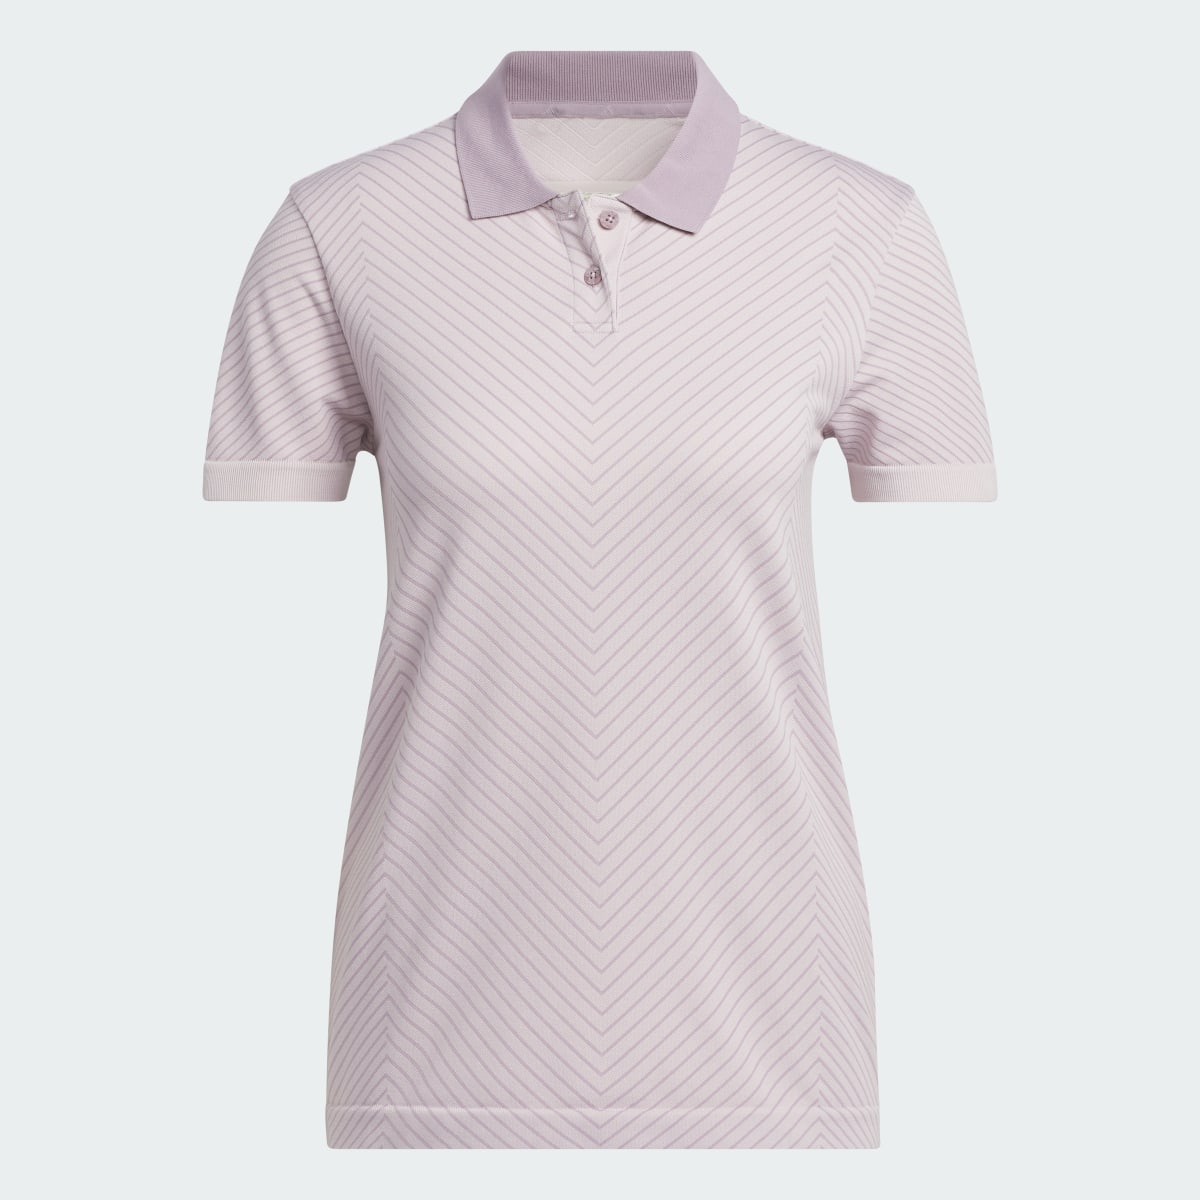 Adidas Ultimate365 Tour Primeknit Polo Shirt. 5